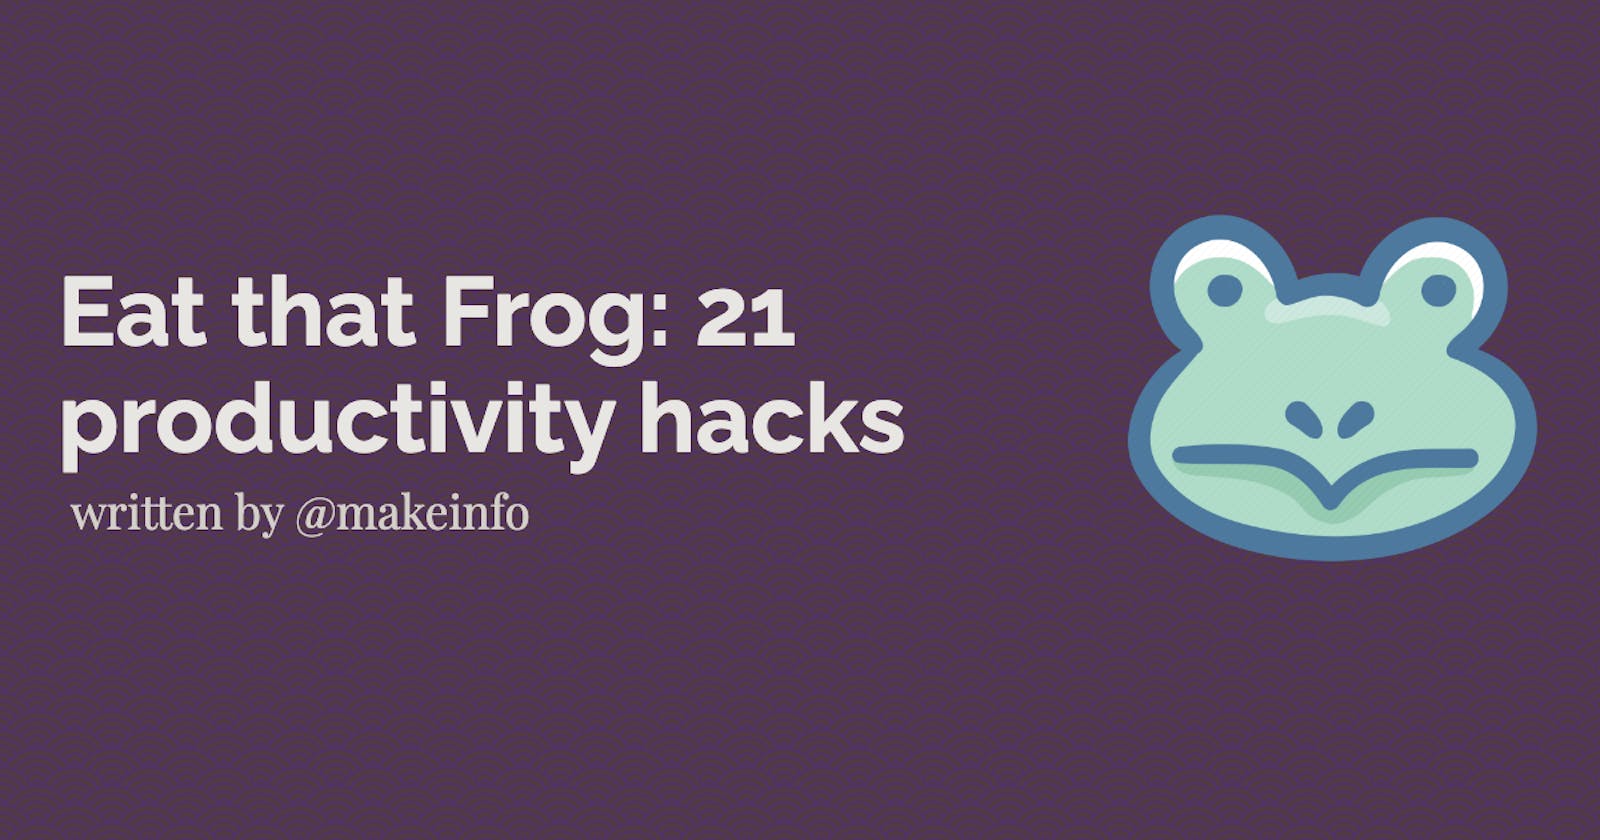 Eat that Frog: 21 productivity hacks